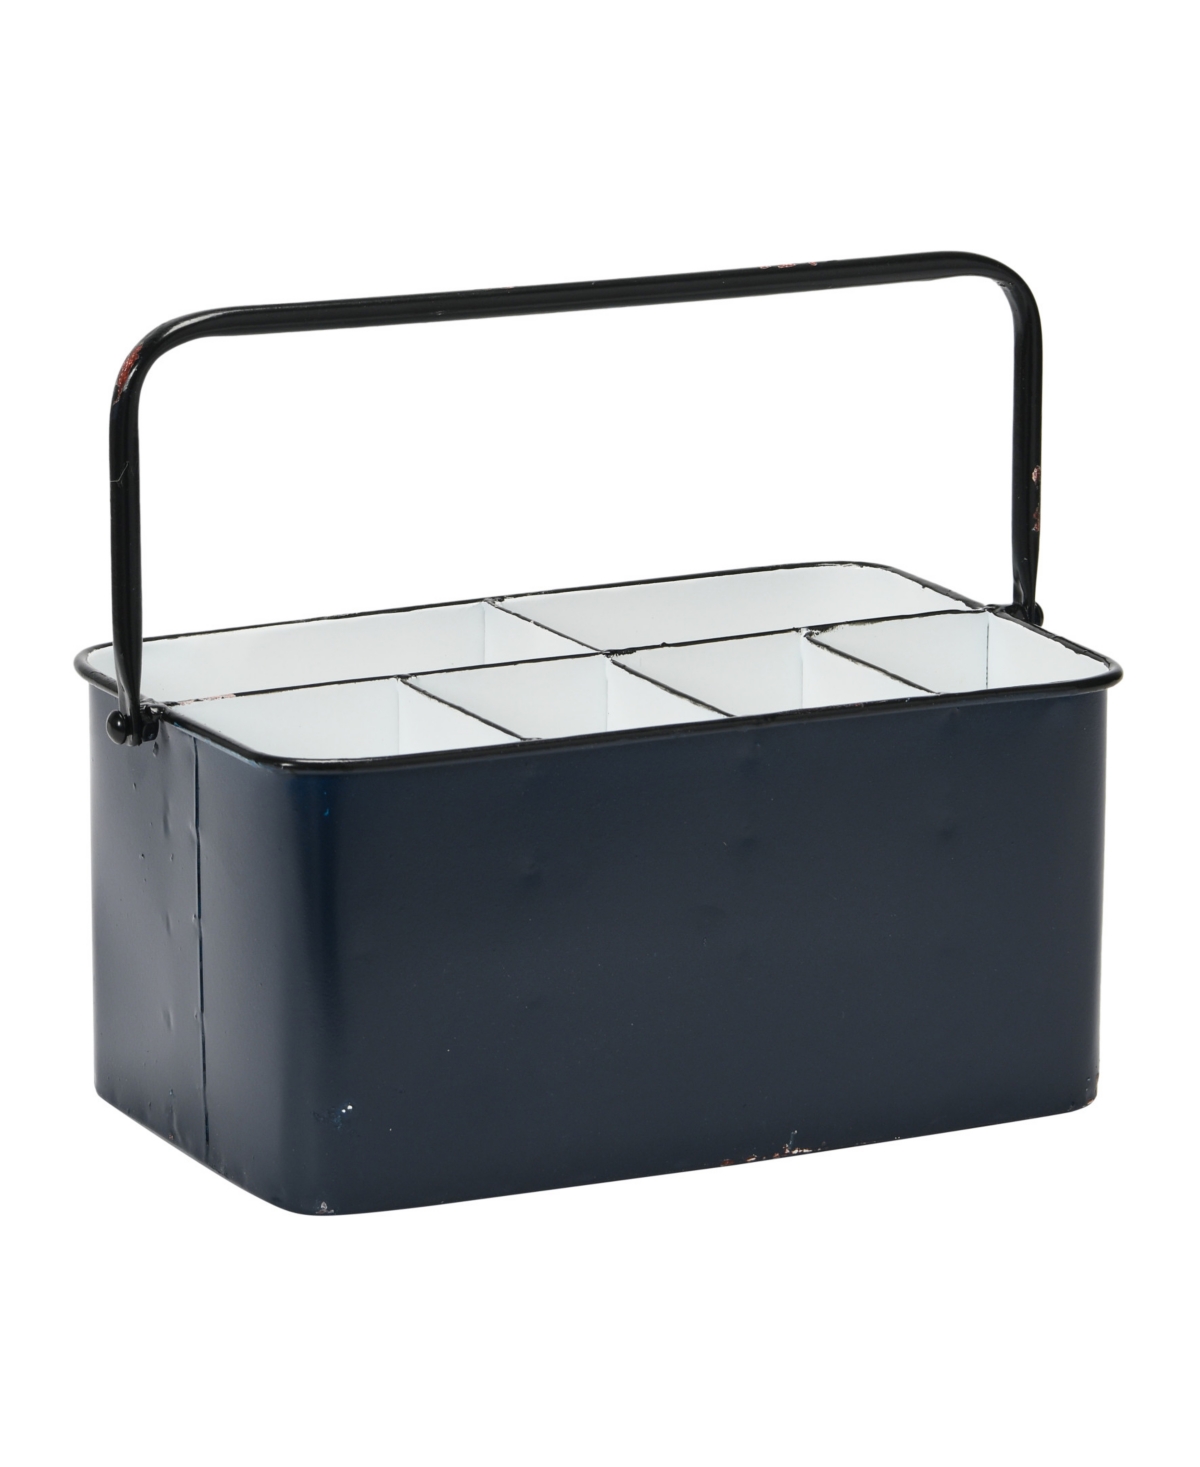 mDesign Plastic Shower Caddy Storage Organizer Utility Tote - Olive Green/Satin